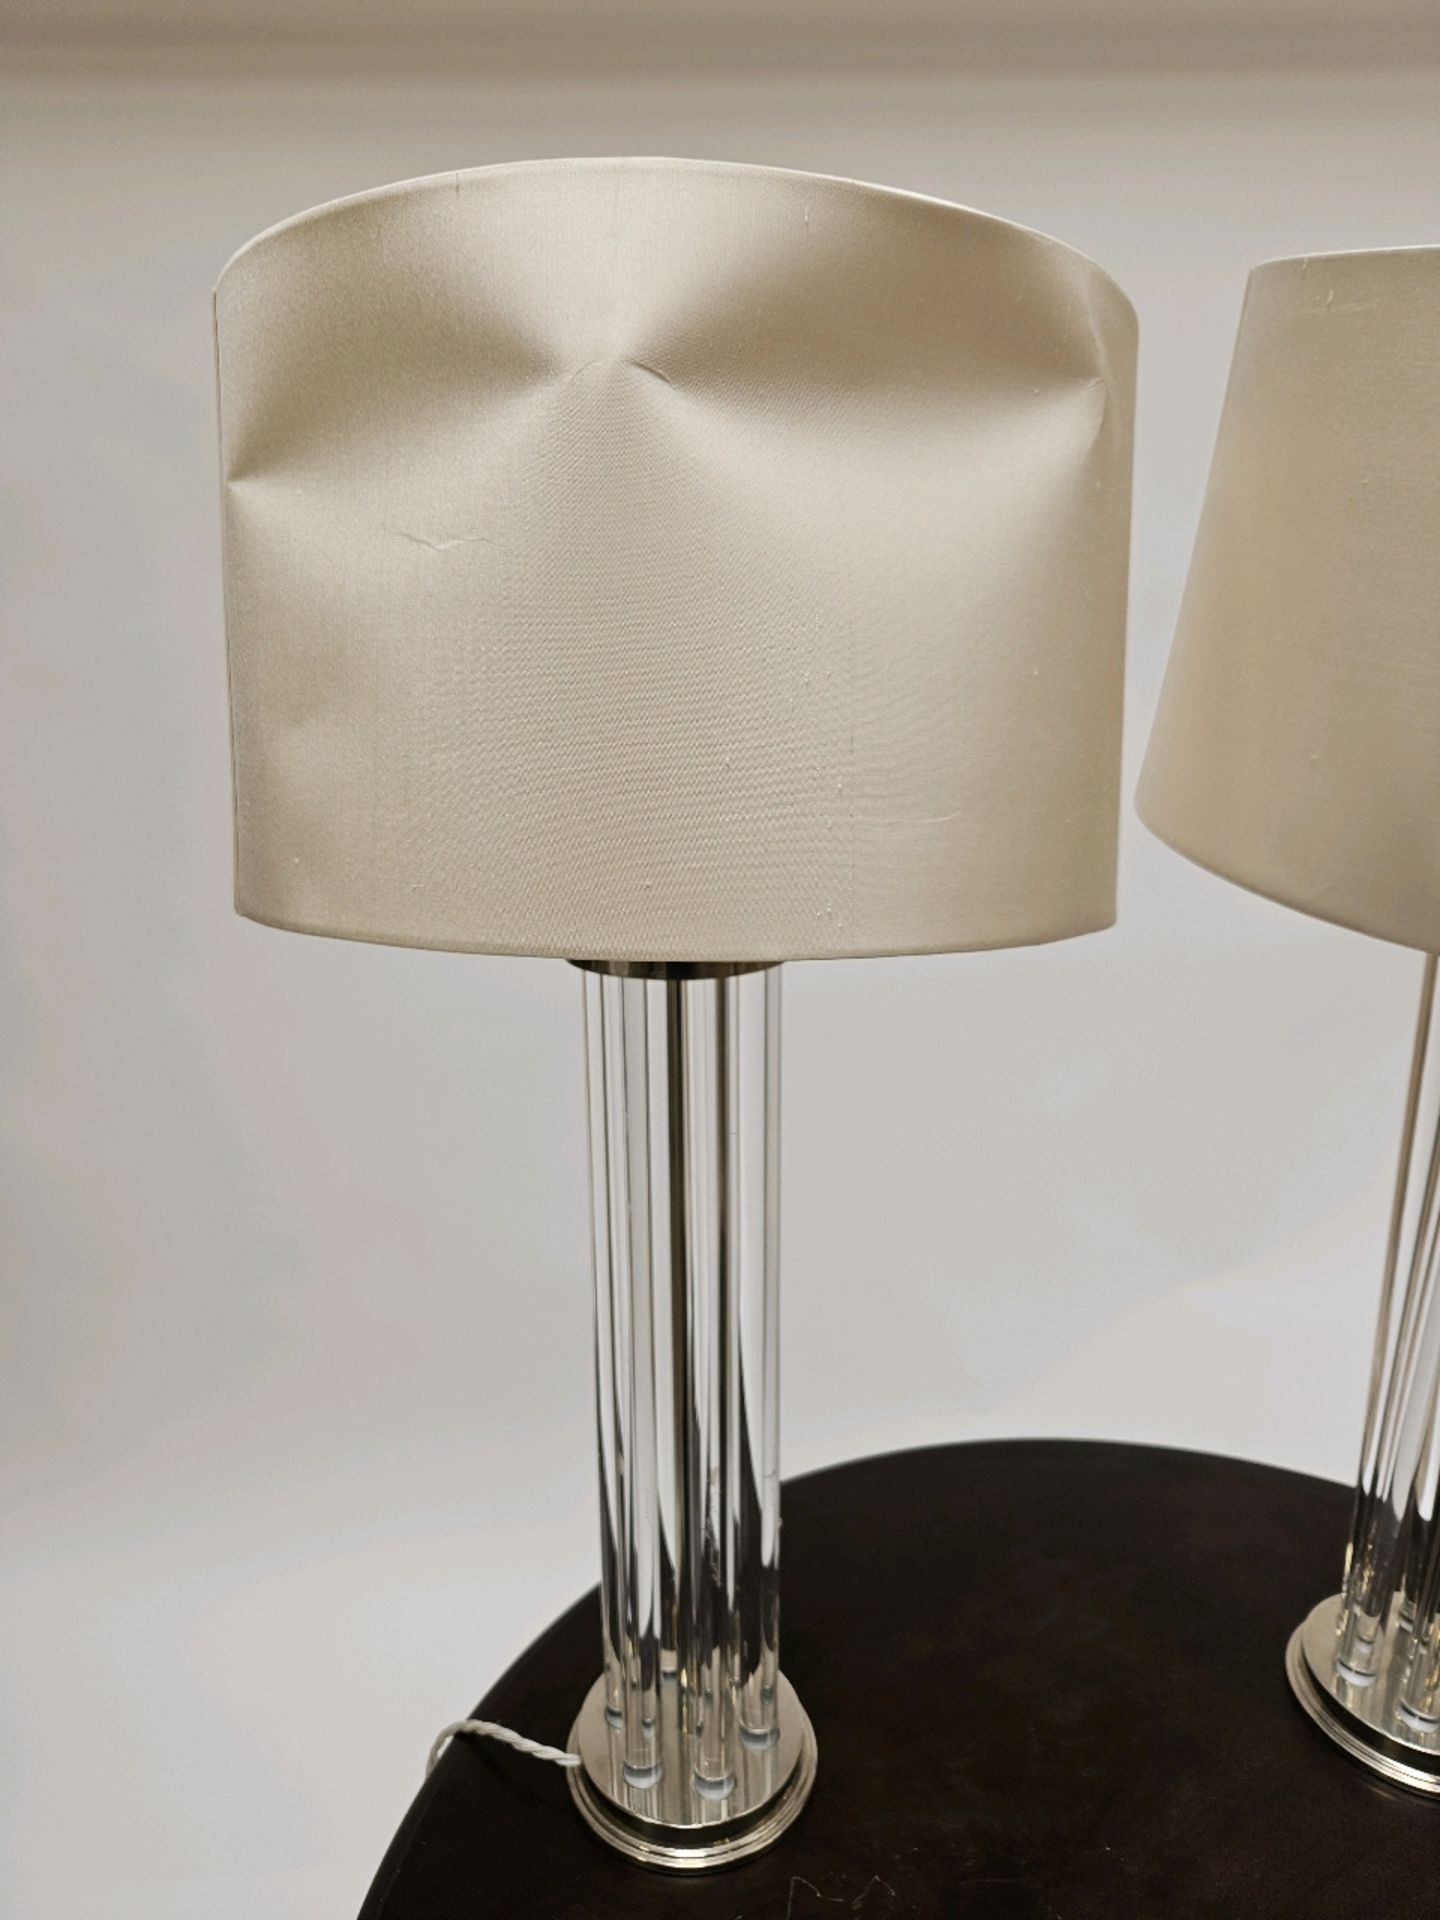 Bella Figura Table Lamps x 2 - Image 3 of 4